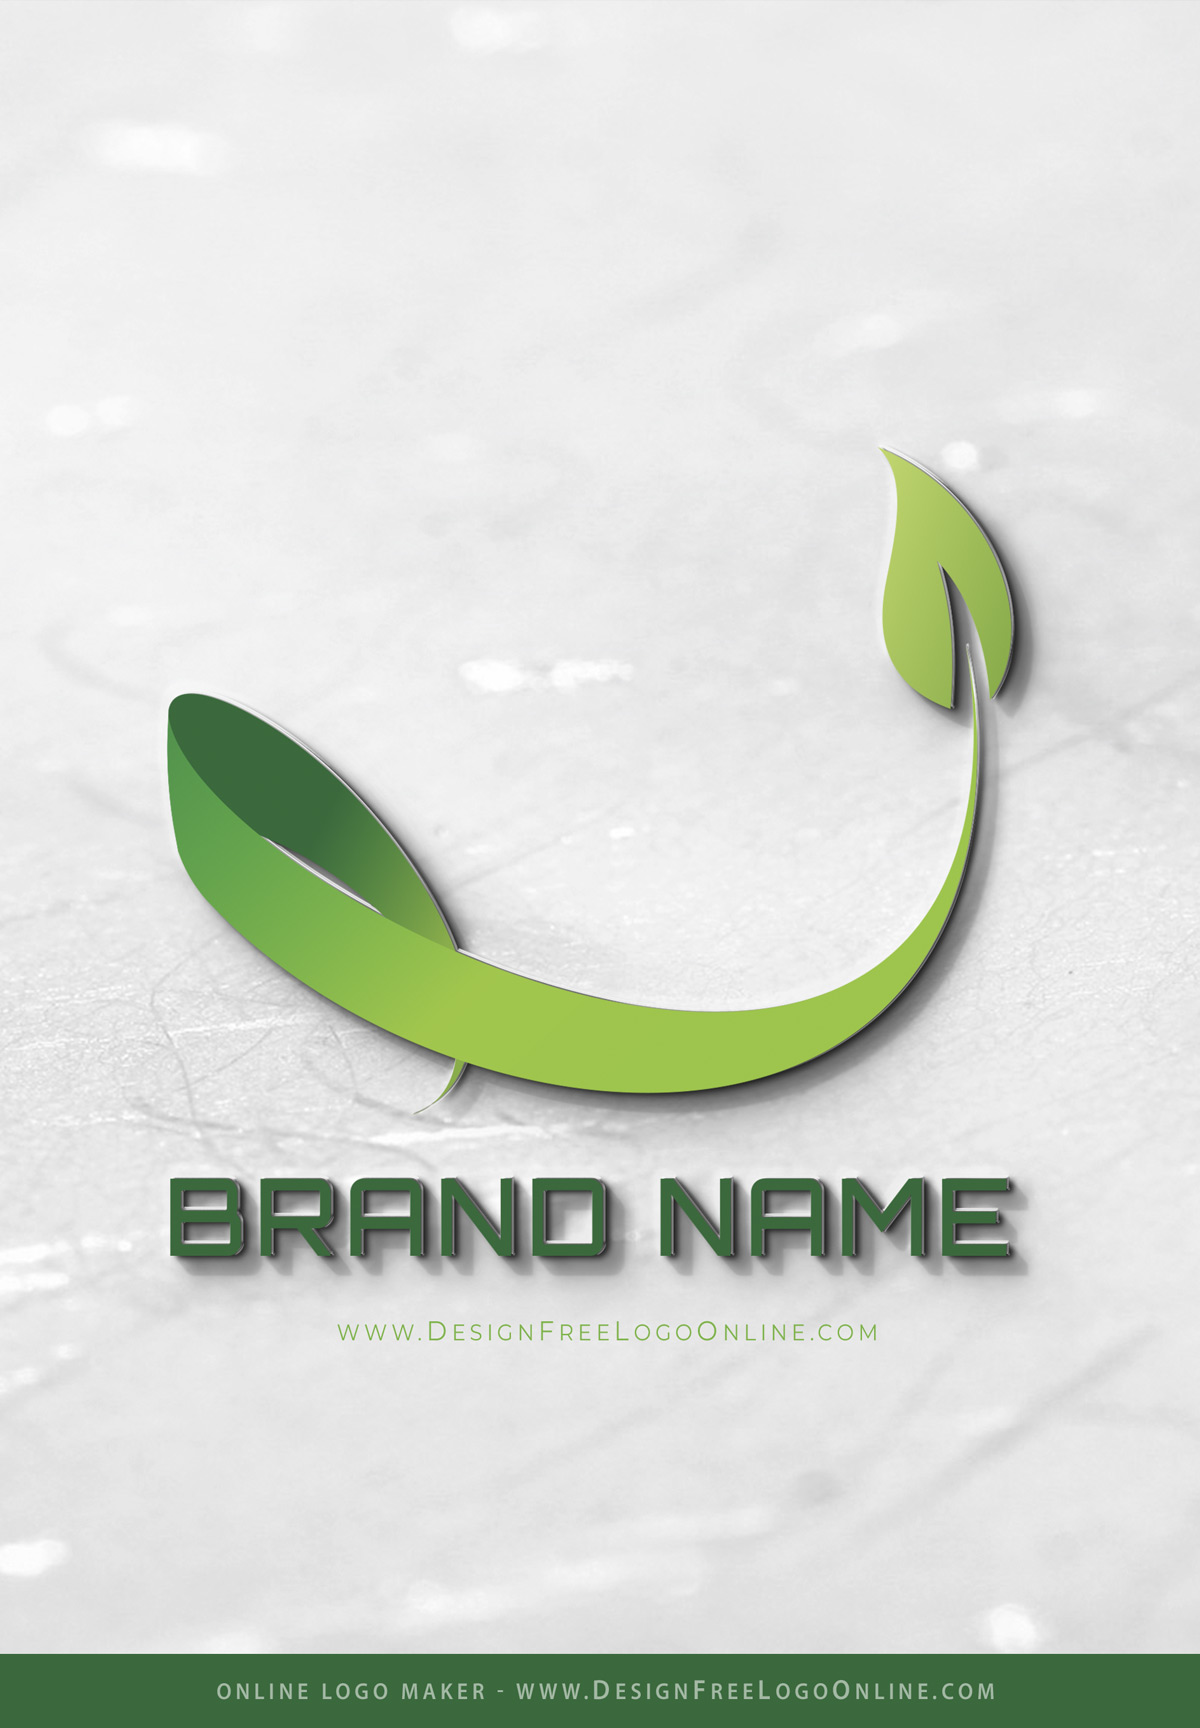 free online logo designing and download